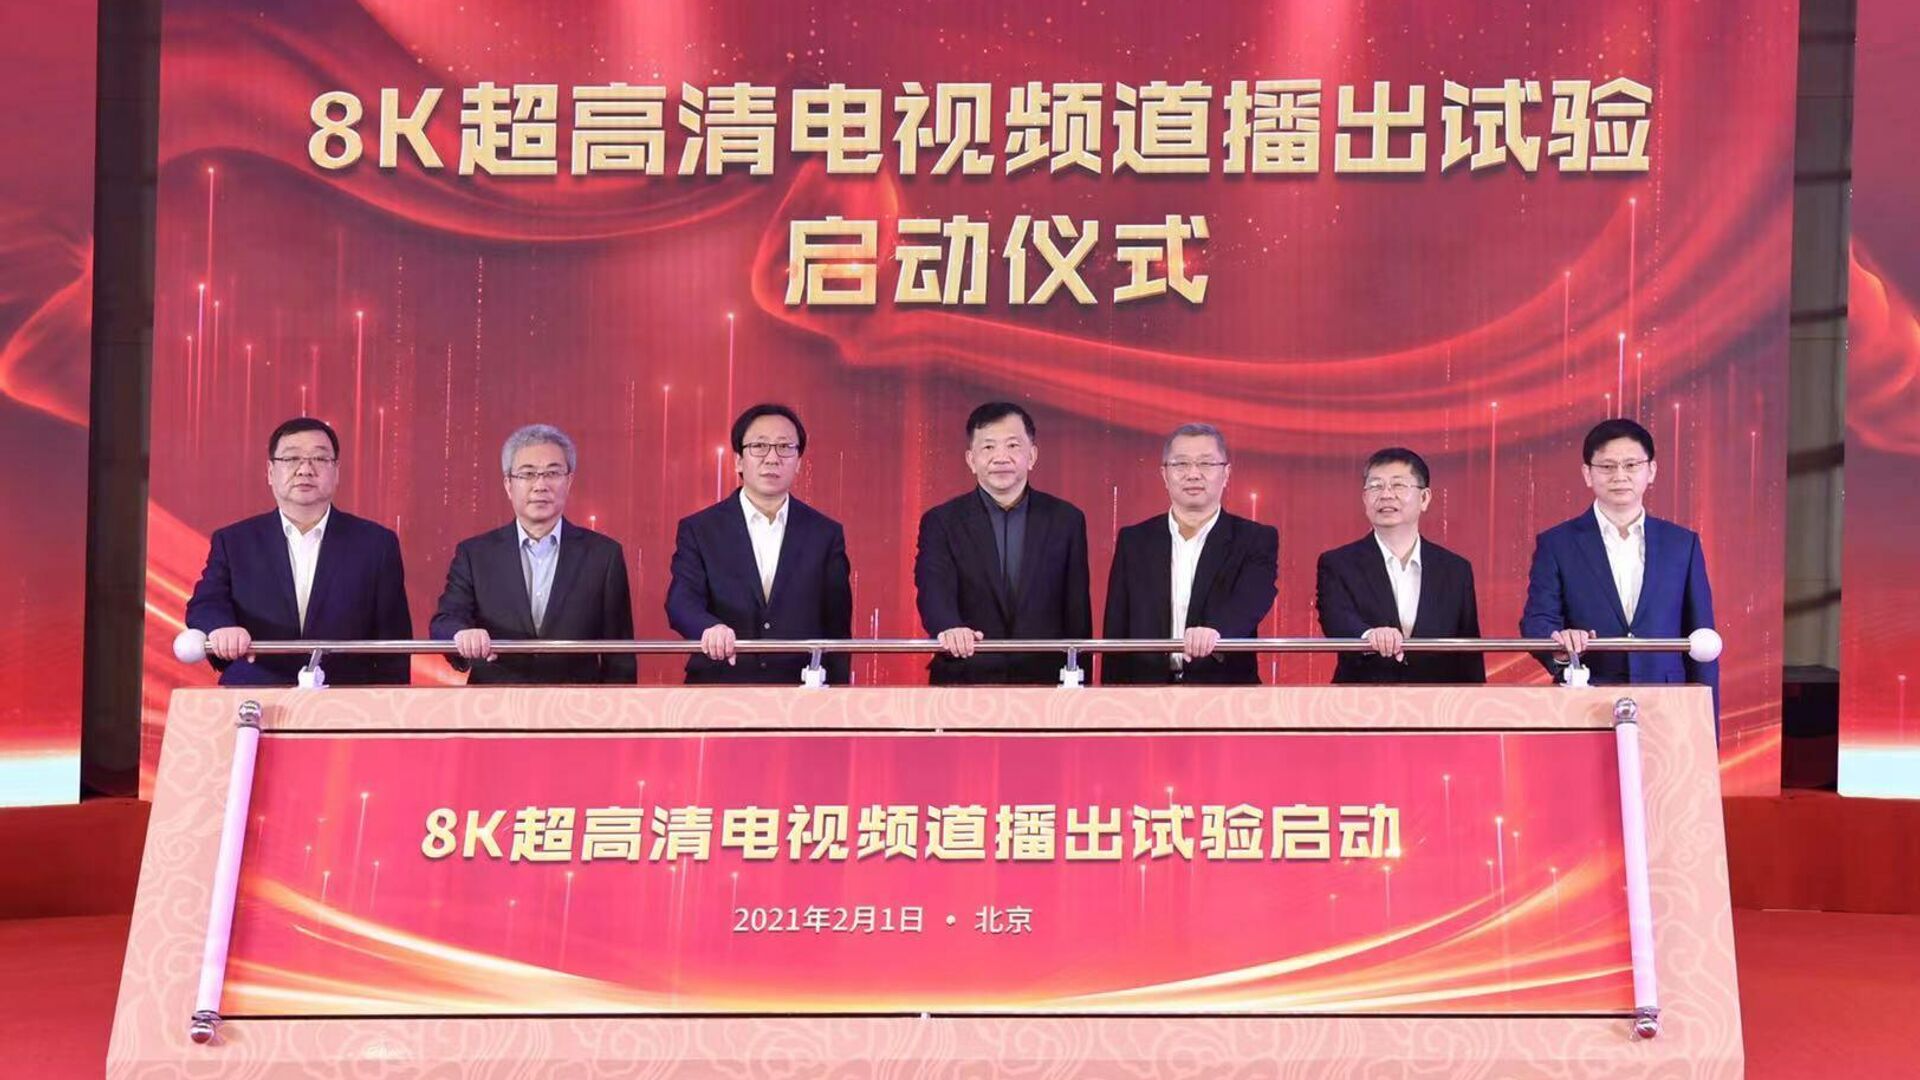 В КНР запустили тестовый режим телевещания 8K с помощью формата связи 5G - РИА Новости, 1920, 02.02.2021